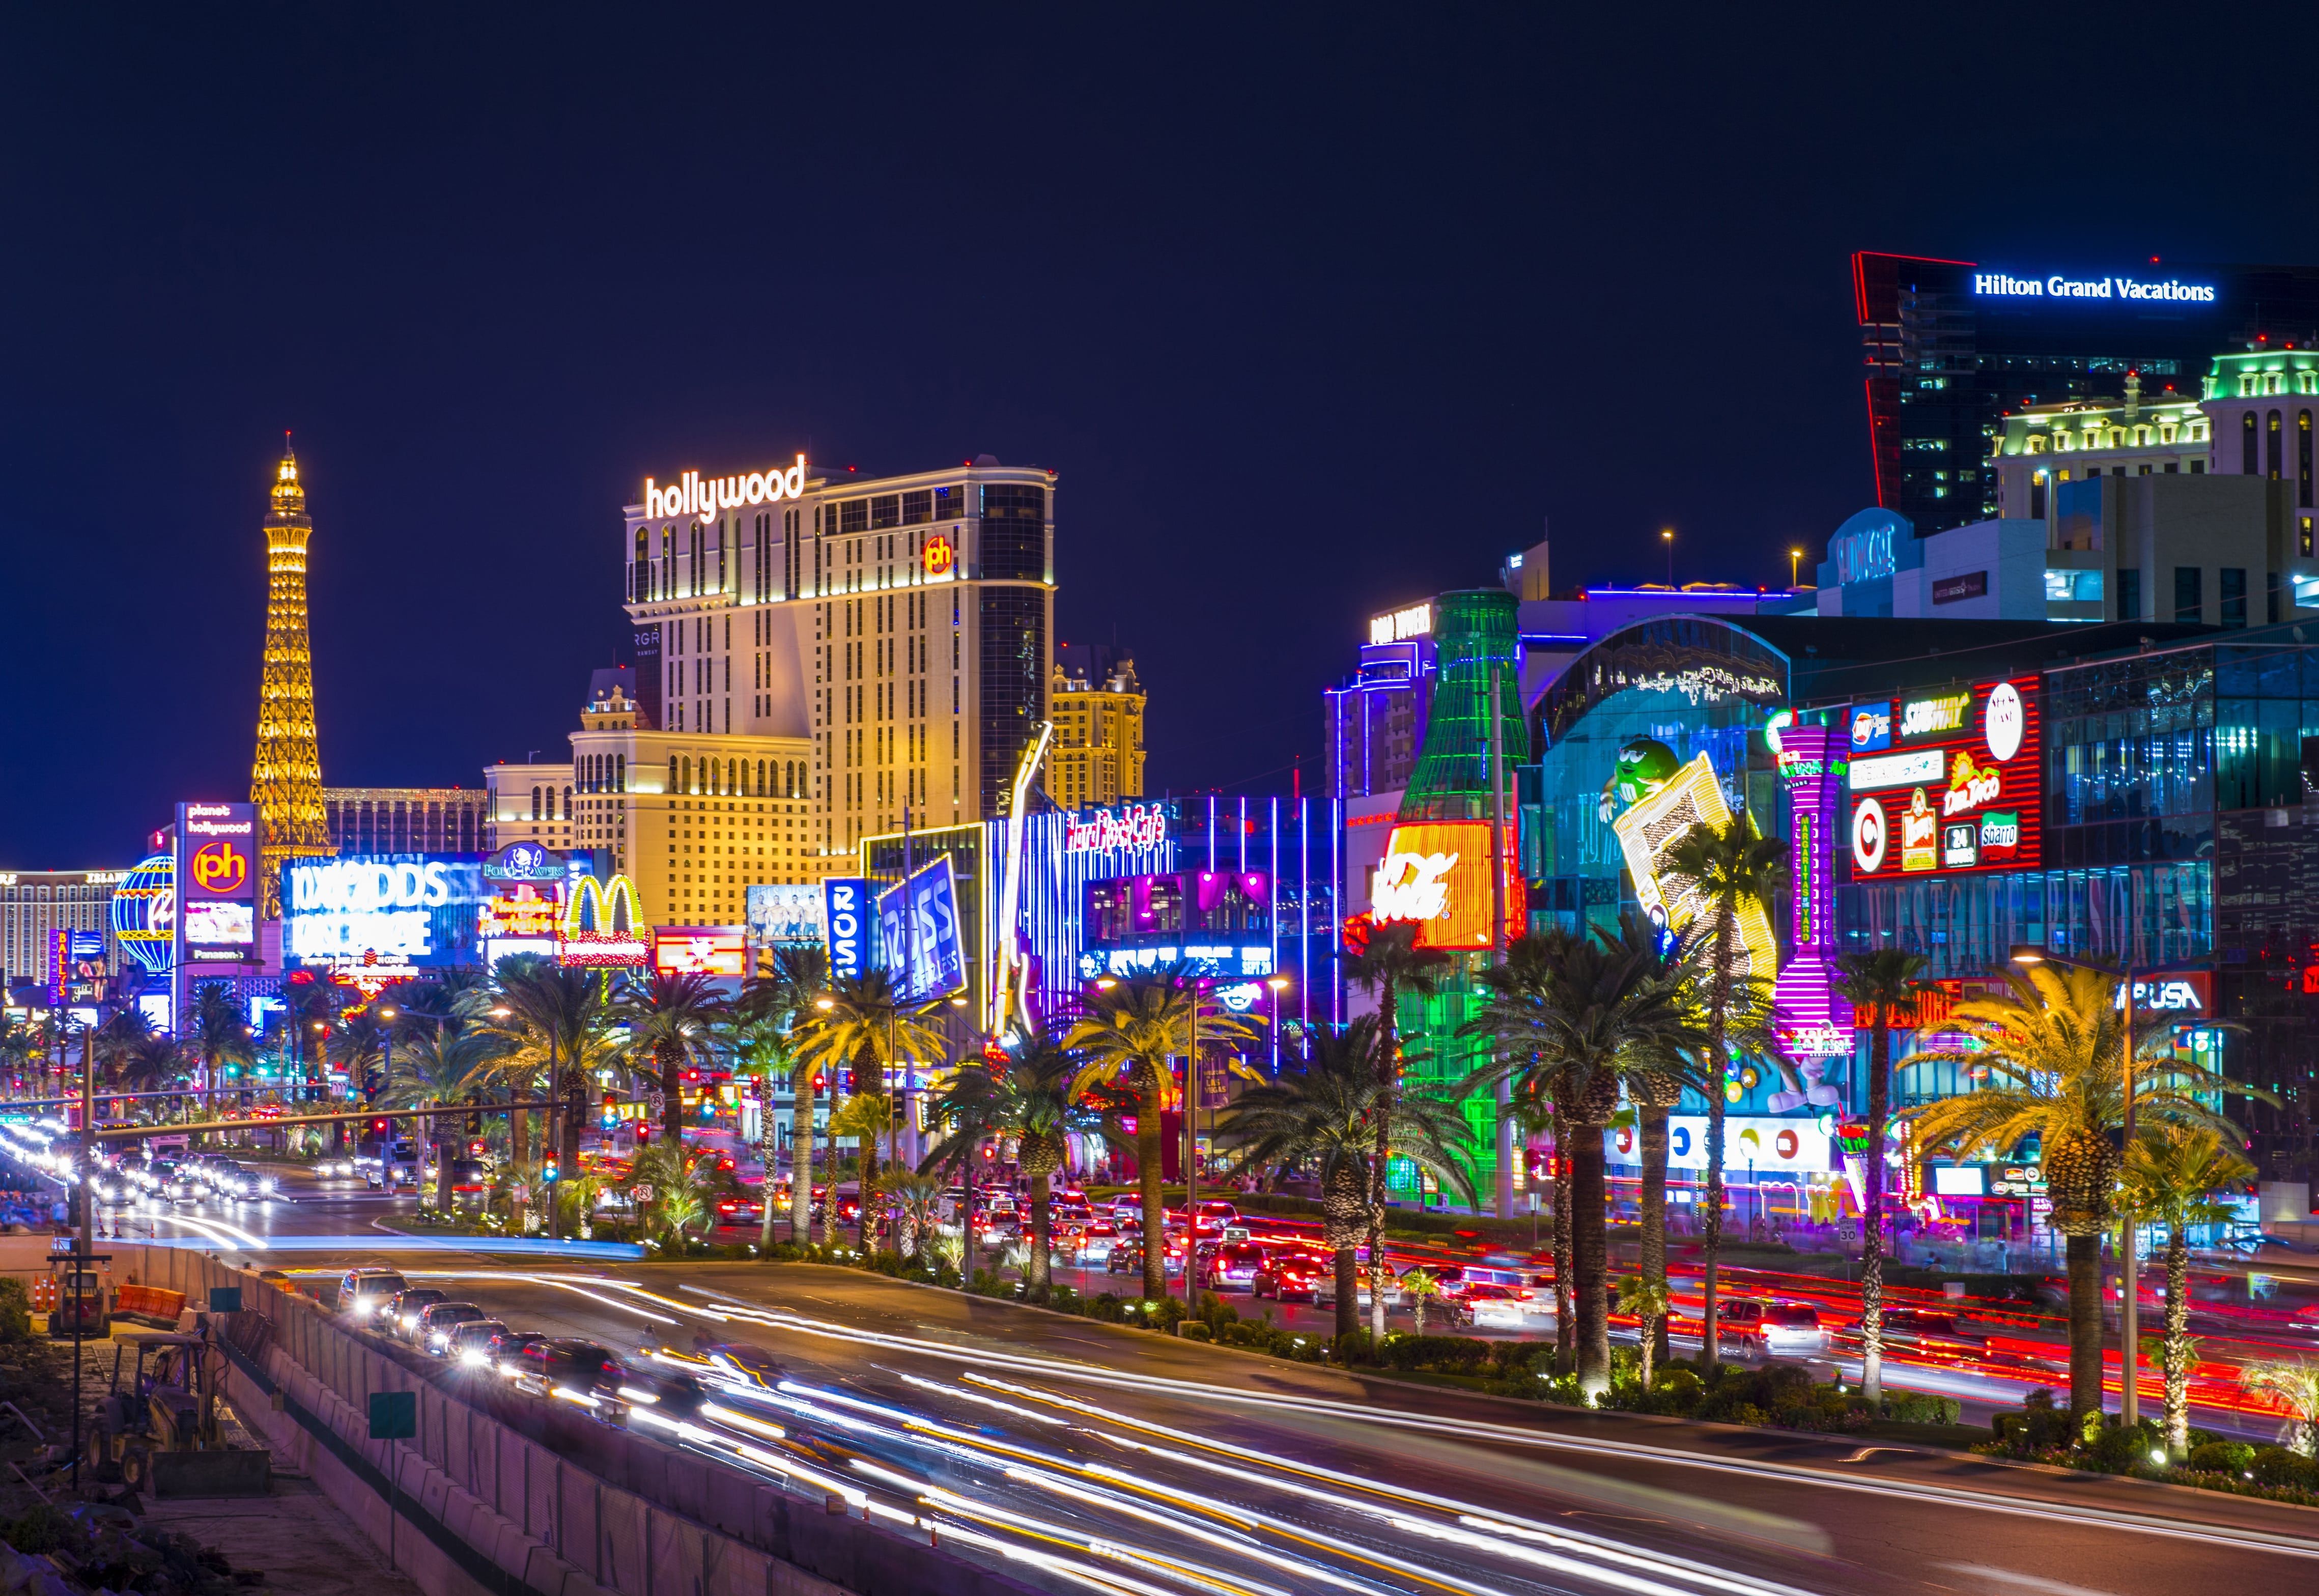 A city street with many neon lights - Las Vegas